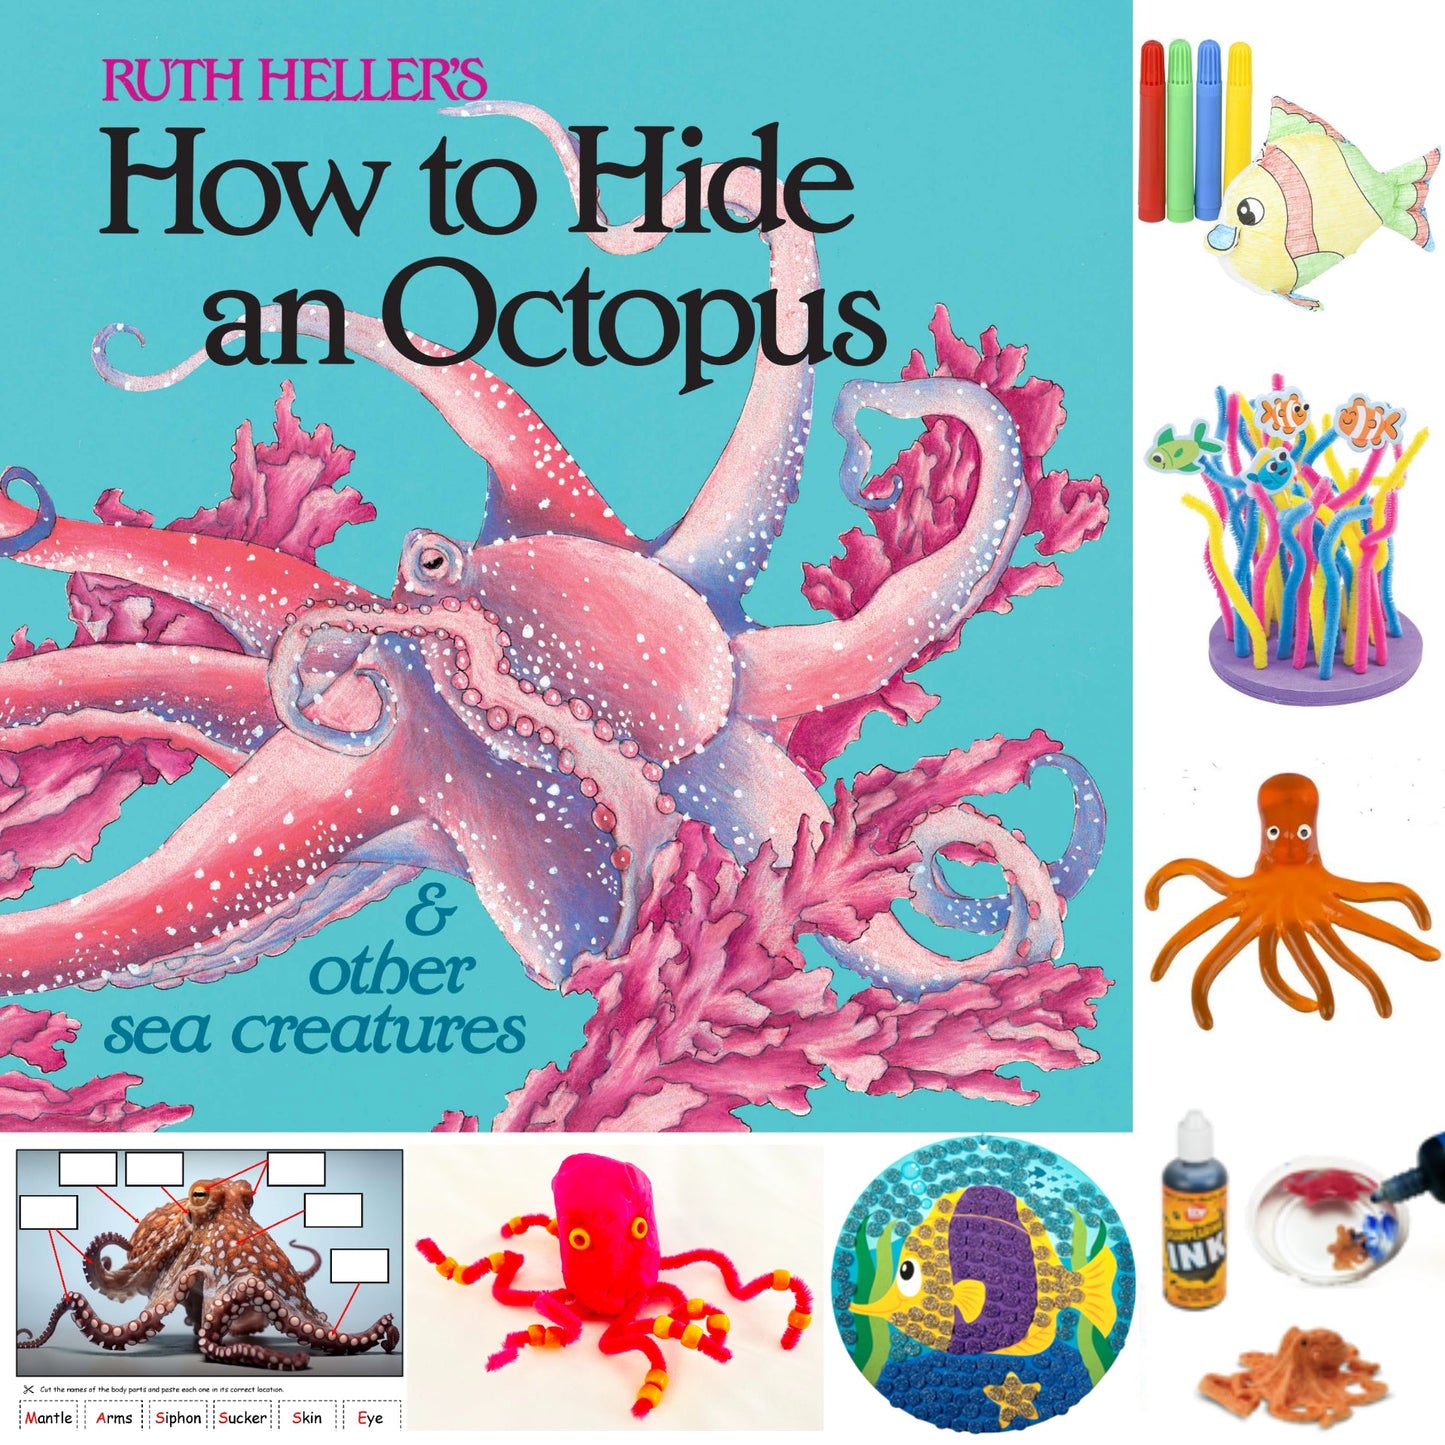 Octopus & Sea Creature themed activities